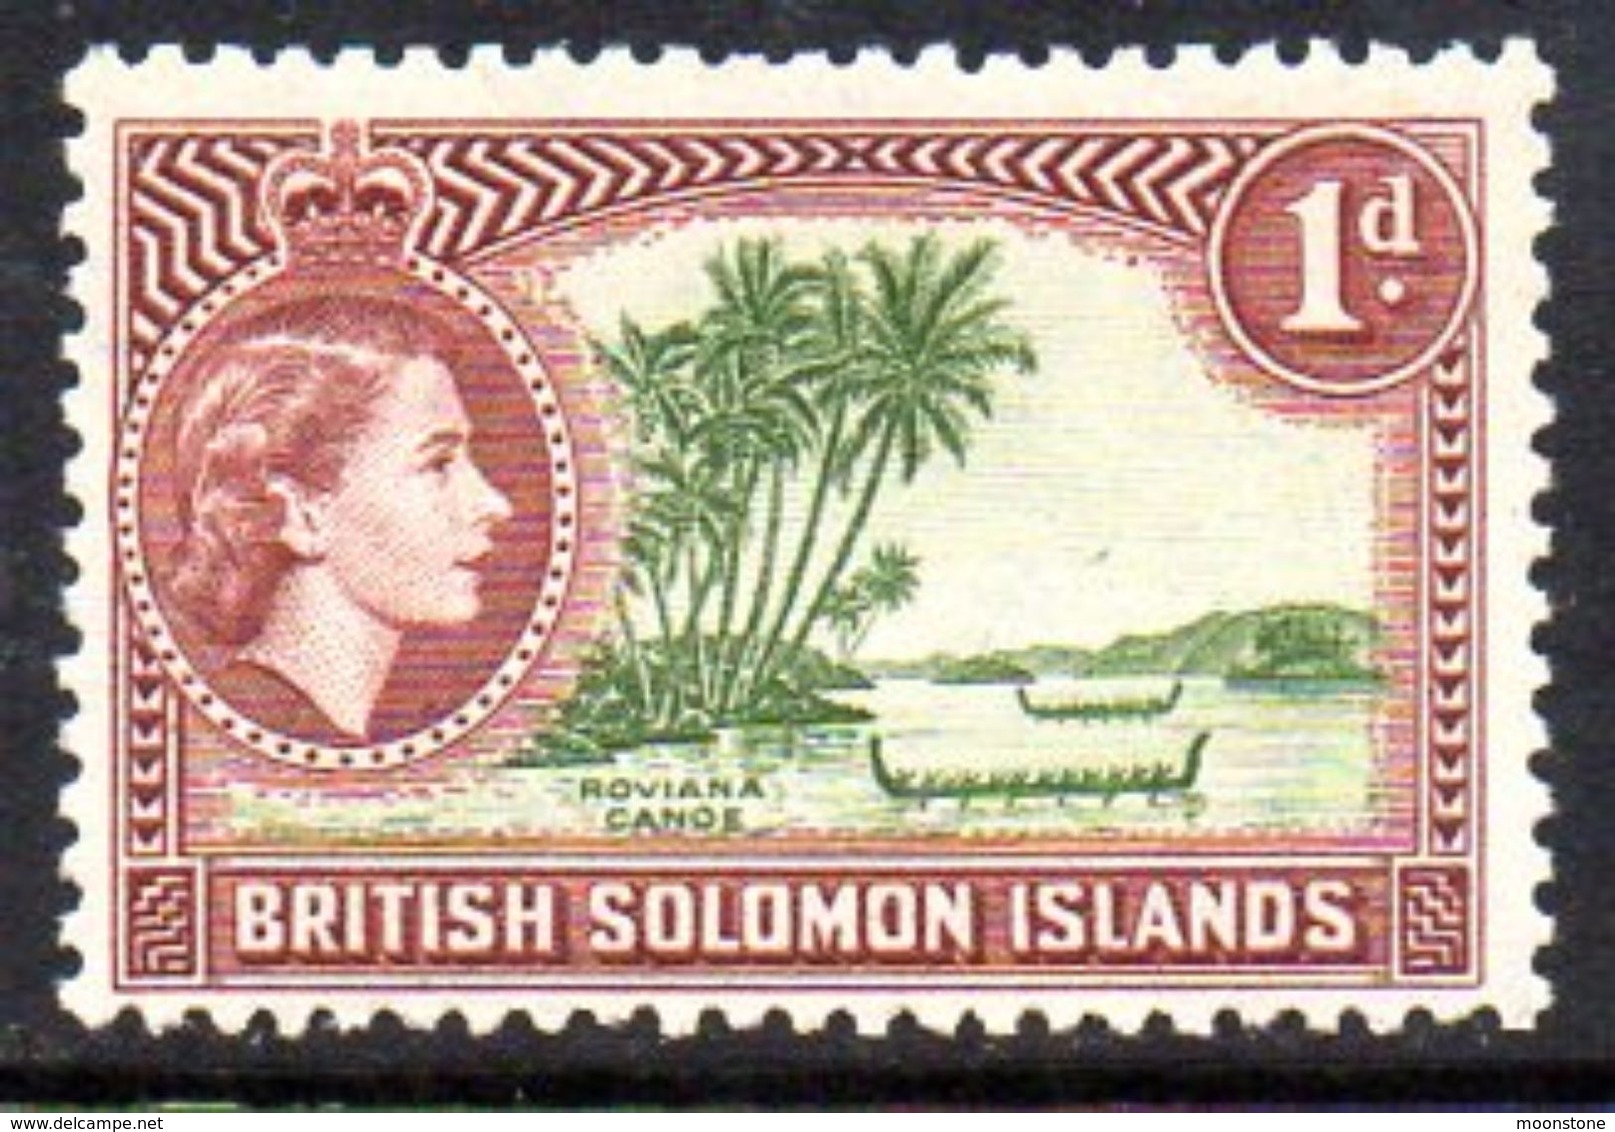 Solomon Islands 1956-63 1d Roviana Canoe Definitive, Hinged Mint, SG 83 (B) - Salomonen (...-1978)